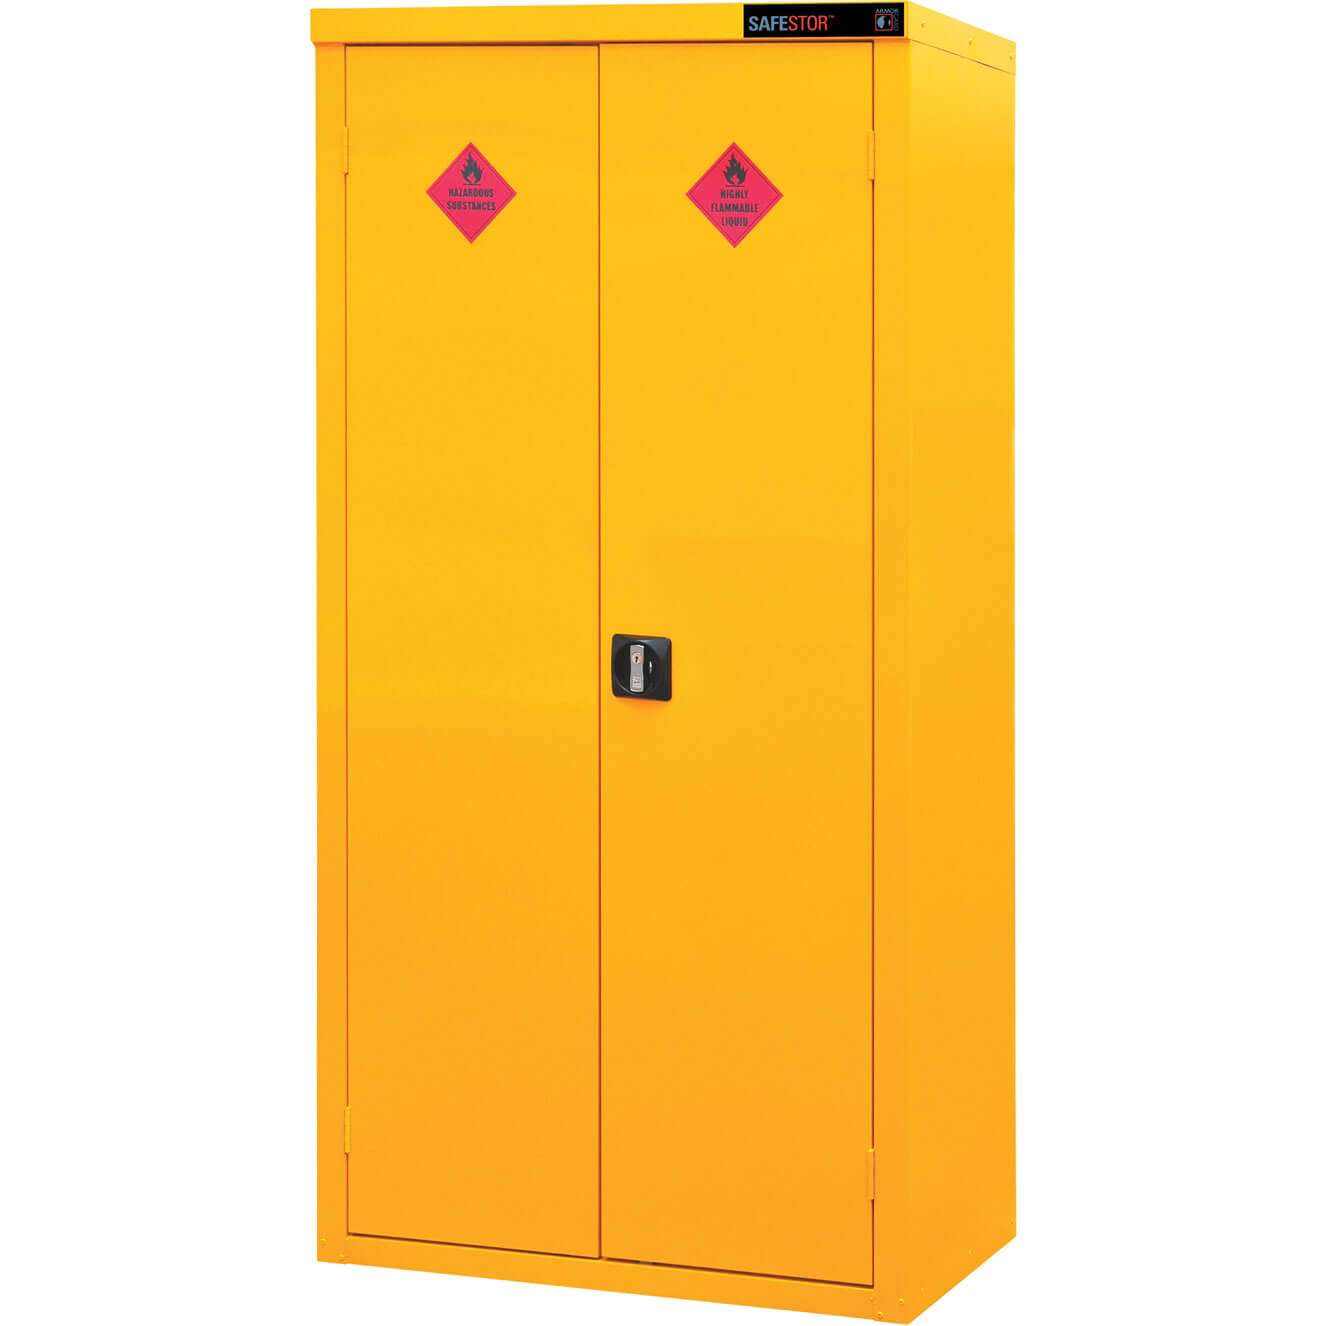 Image of Armorgard Safestor Hazardous Materials Secure Storage Cabinet 900mm 465mm 1800mm